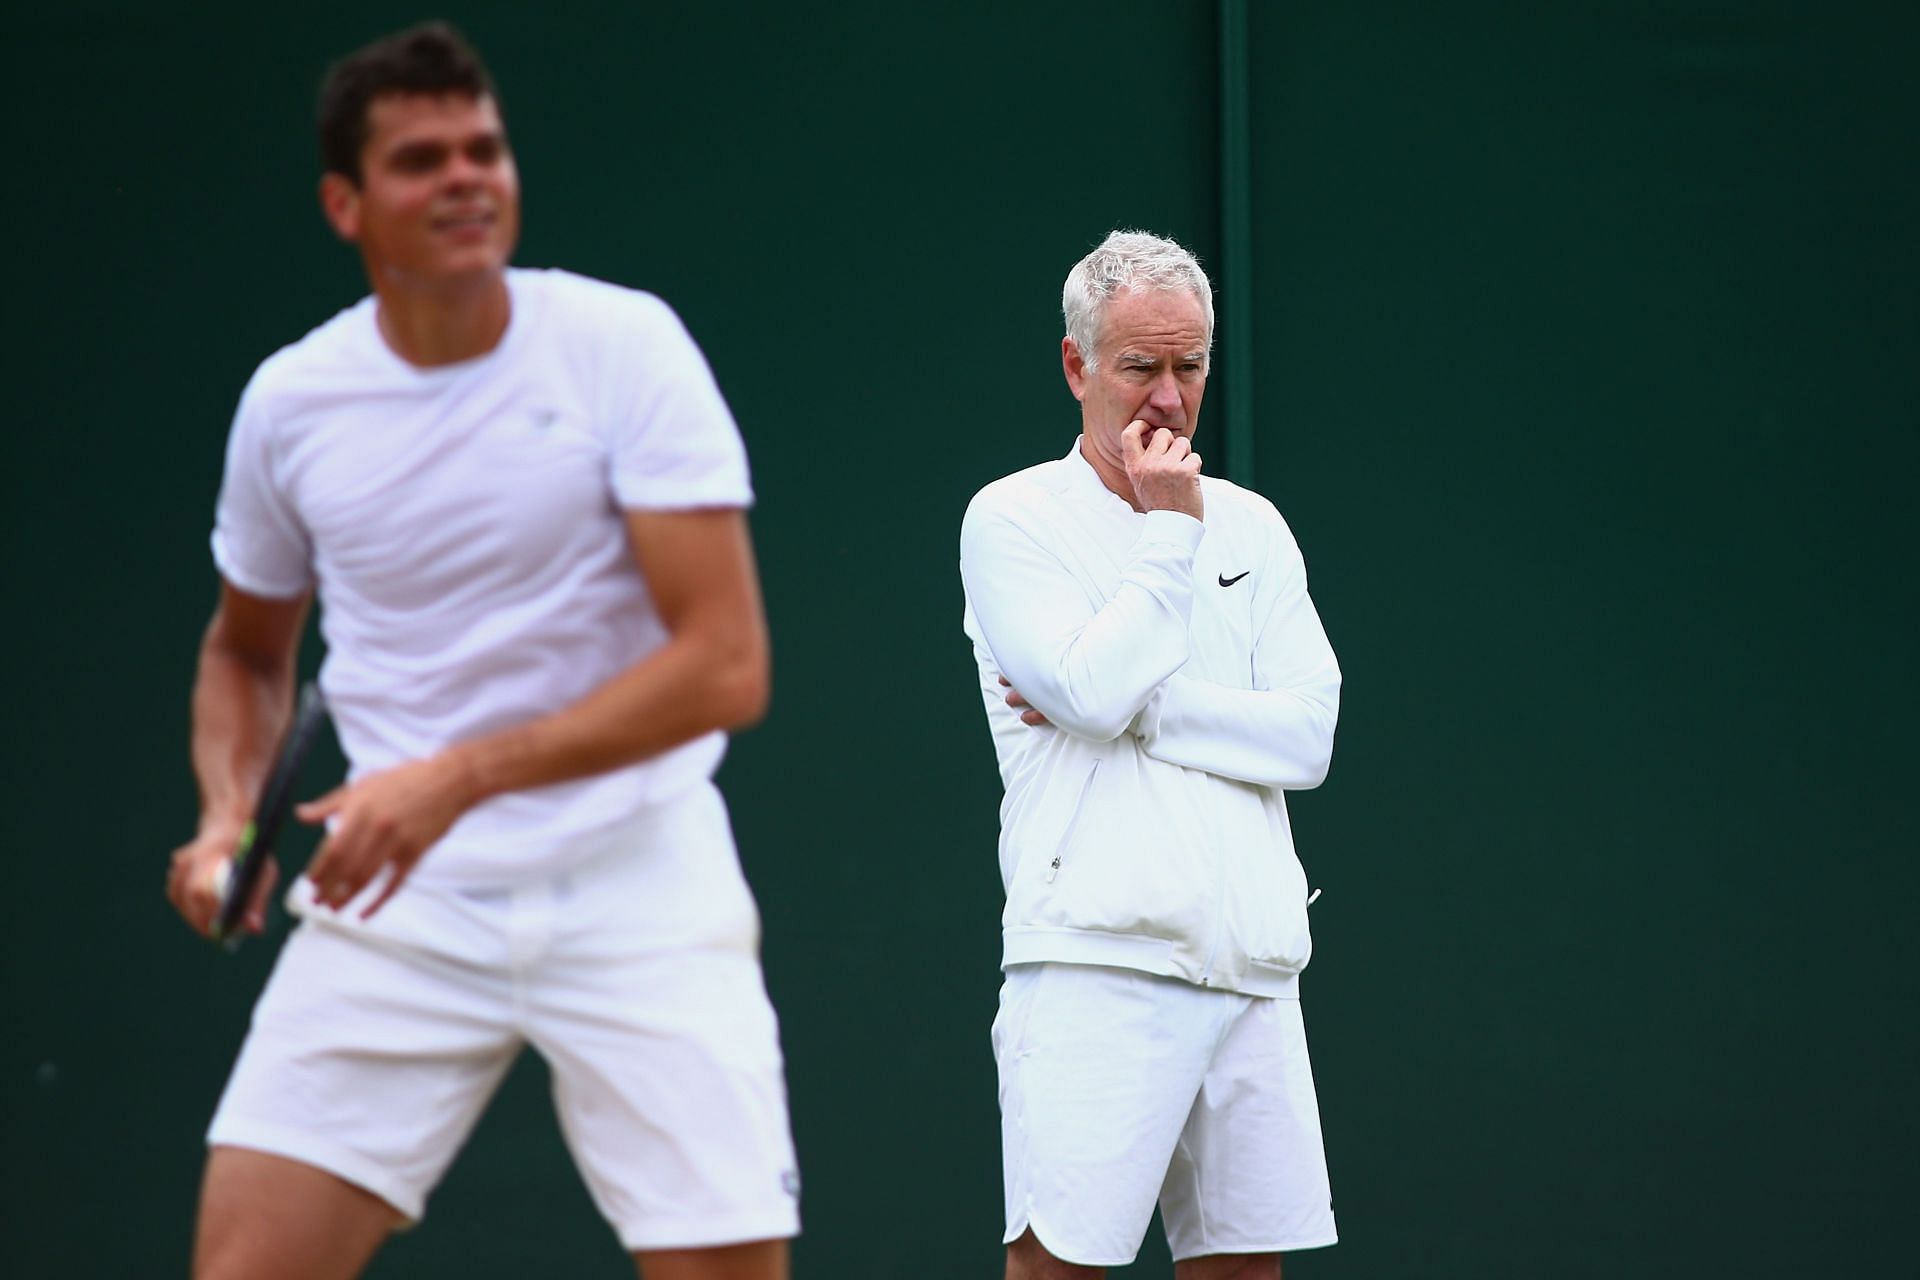 John McEnroe coaching Canadian tennis player Milos Raonic during Wimbledon 2016